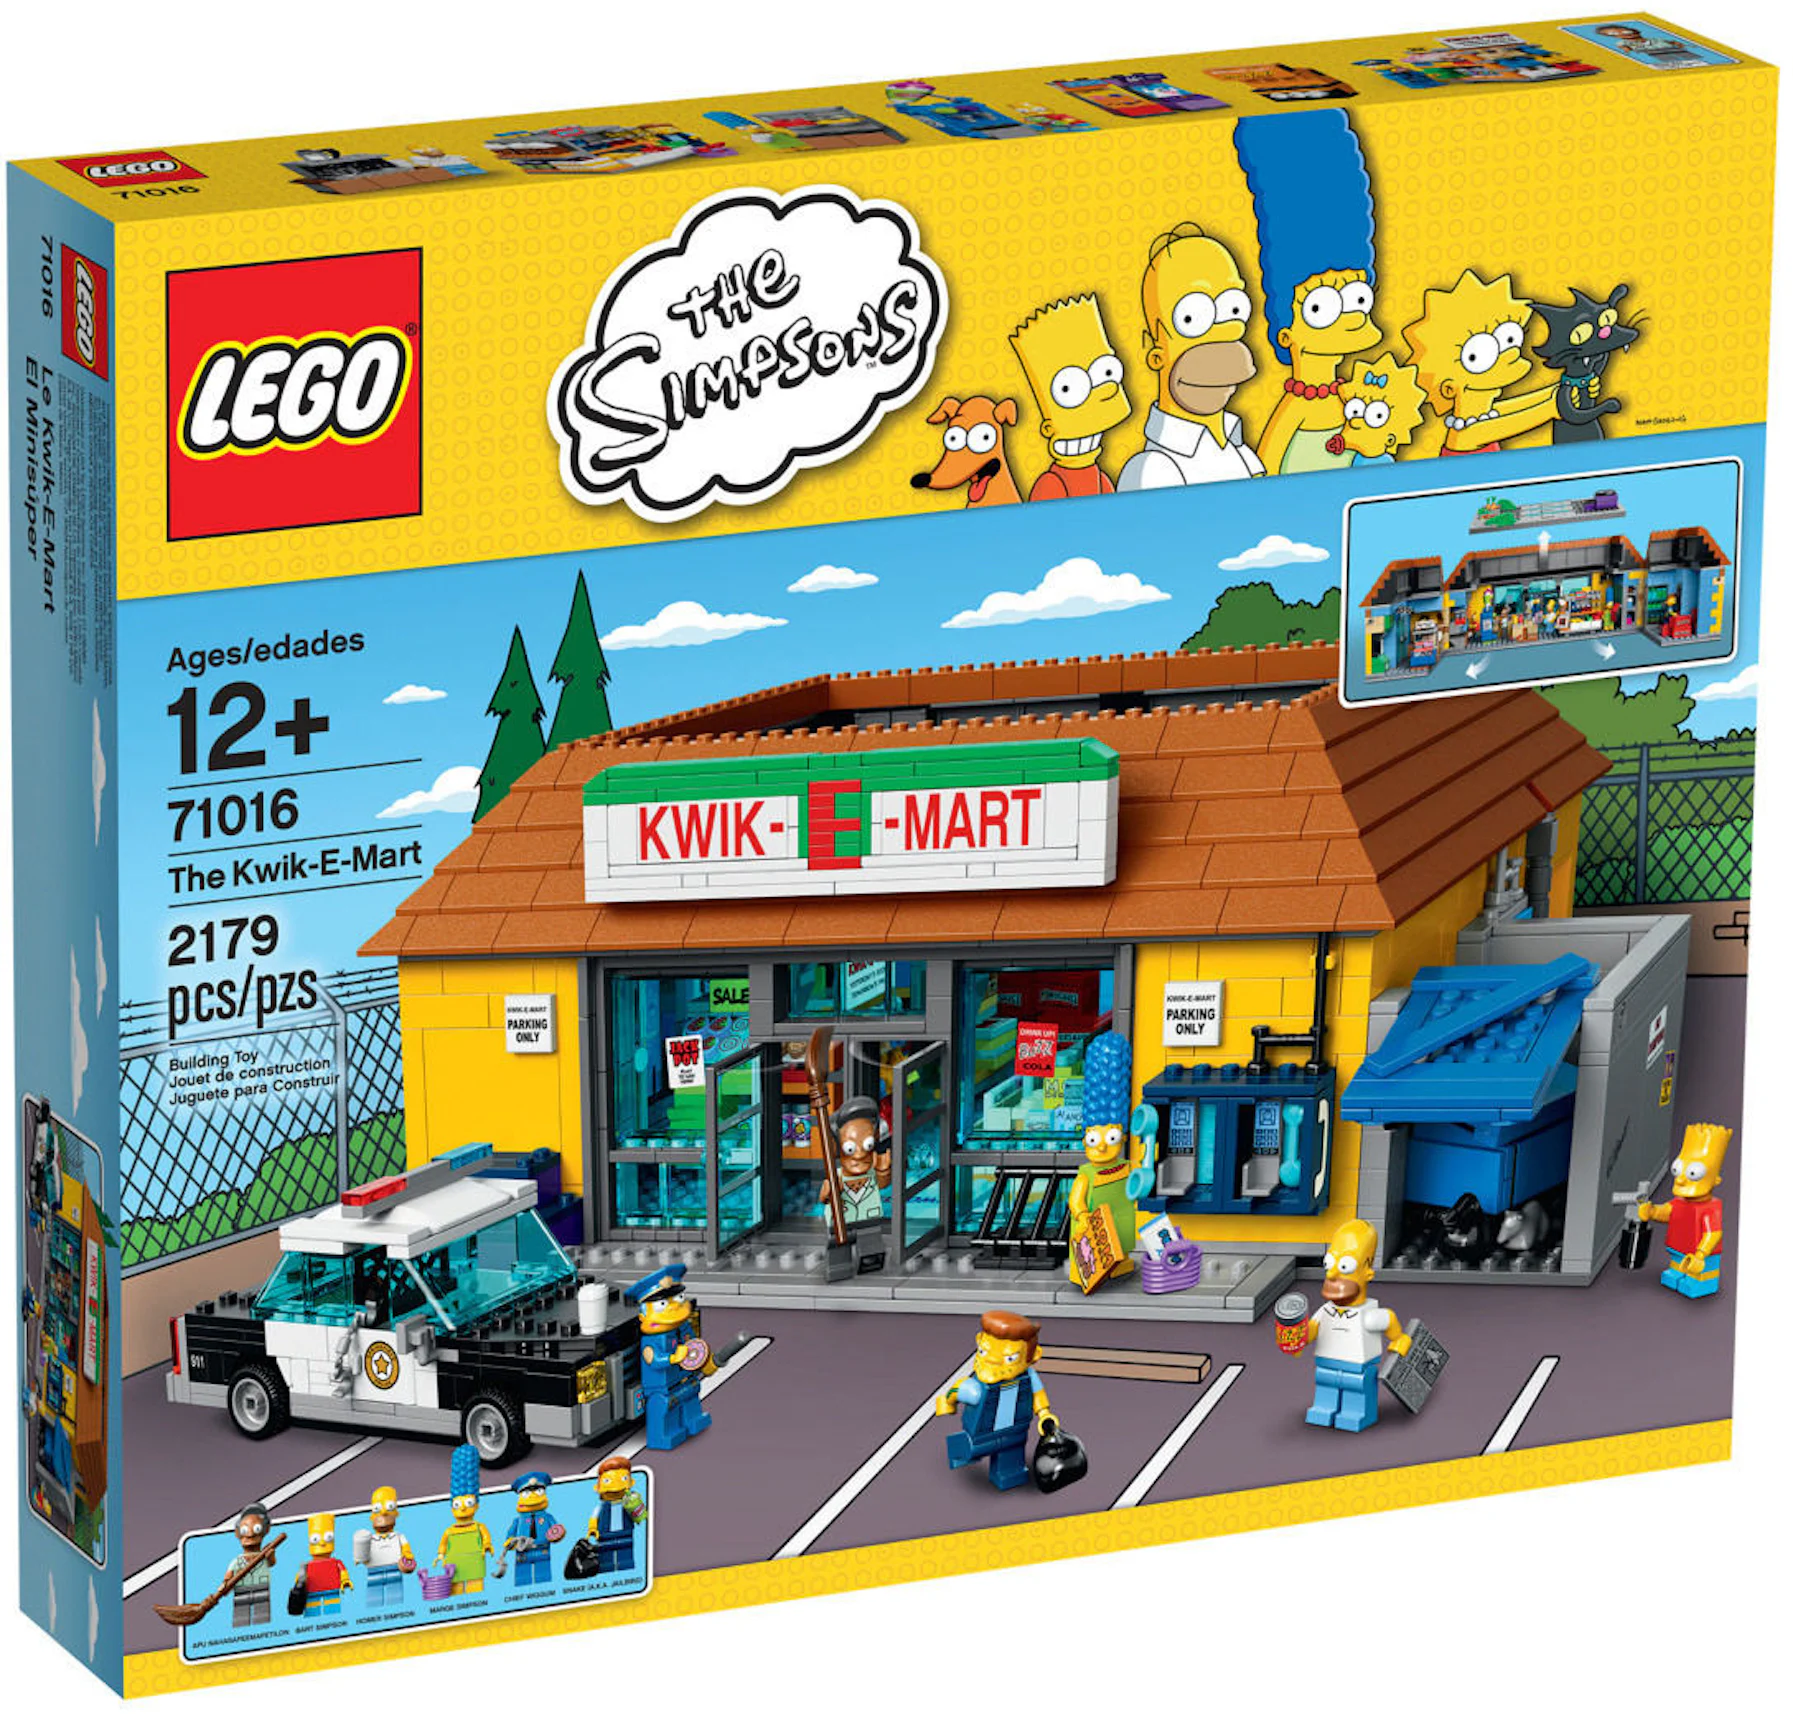 LEGO The Simpsons The Kwik-E Mart Set 71016 - US